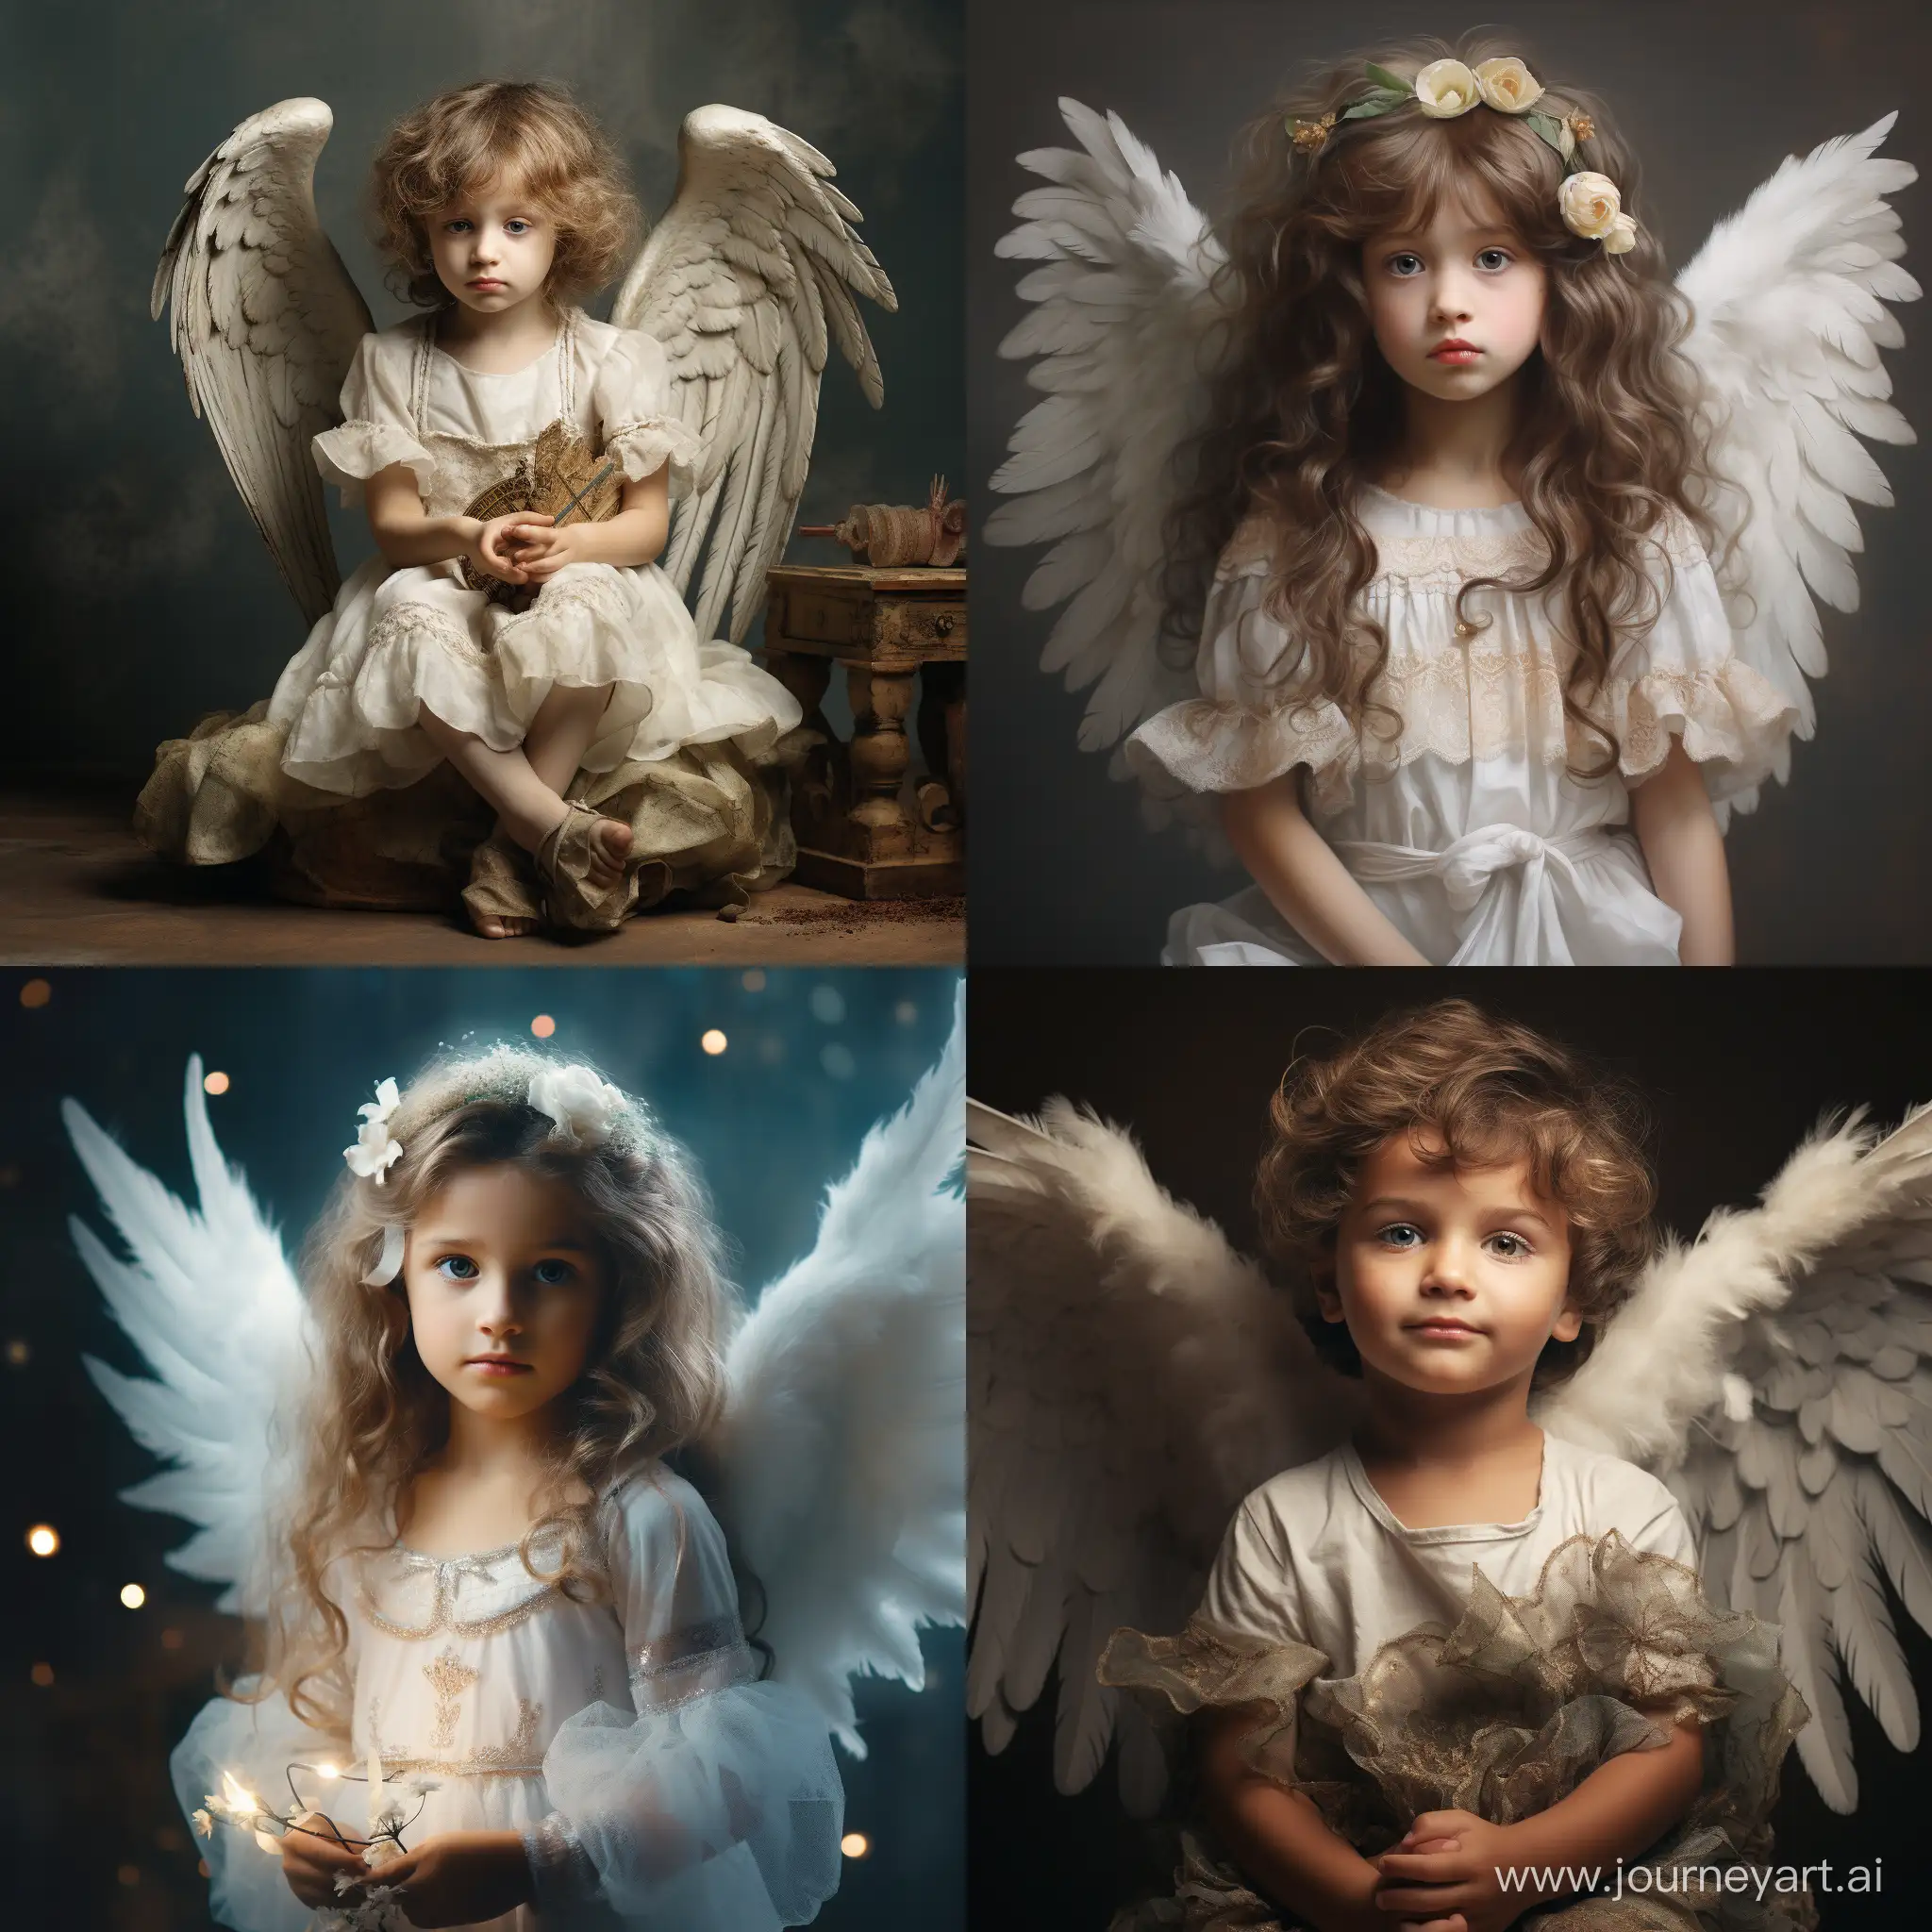 Cherubic-Serenity-Enchanting-Little-Angel-in-a-11-Artistic-Display